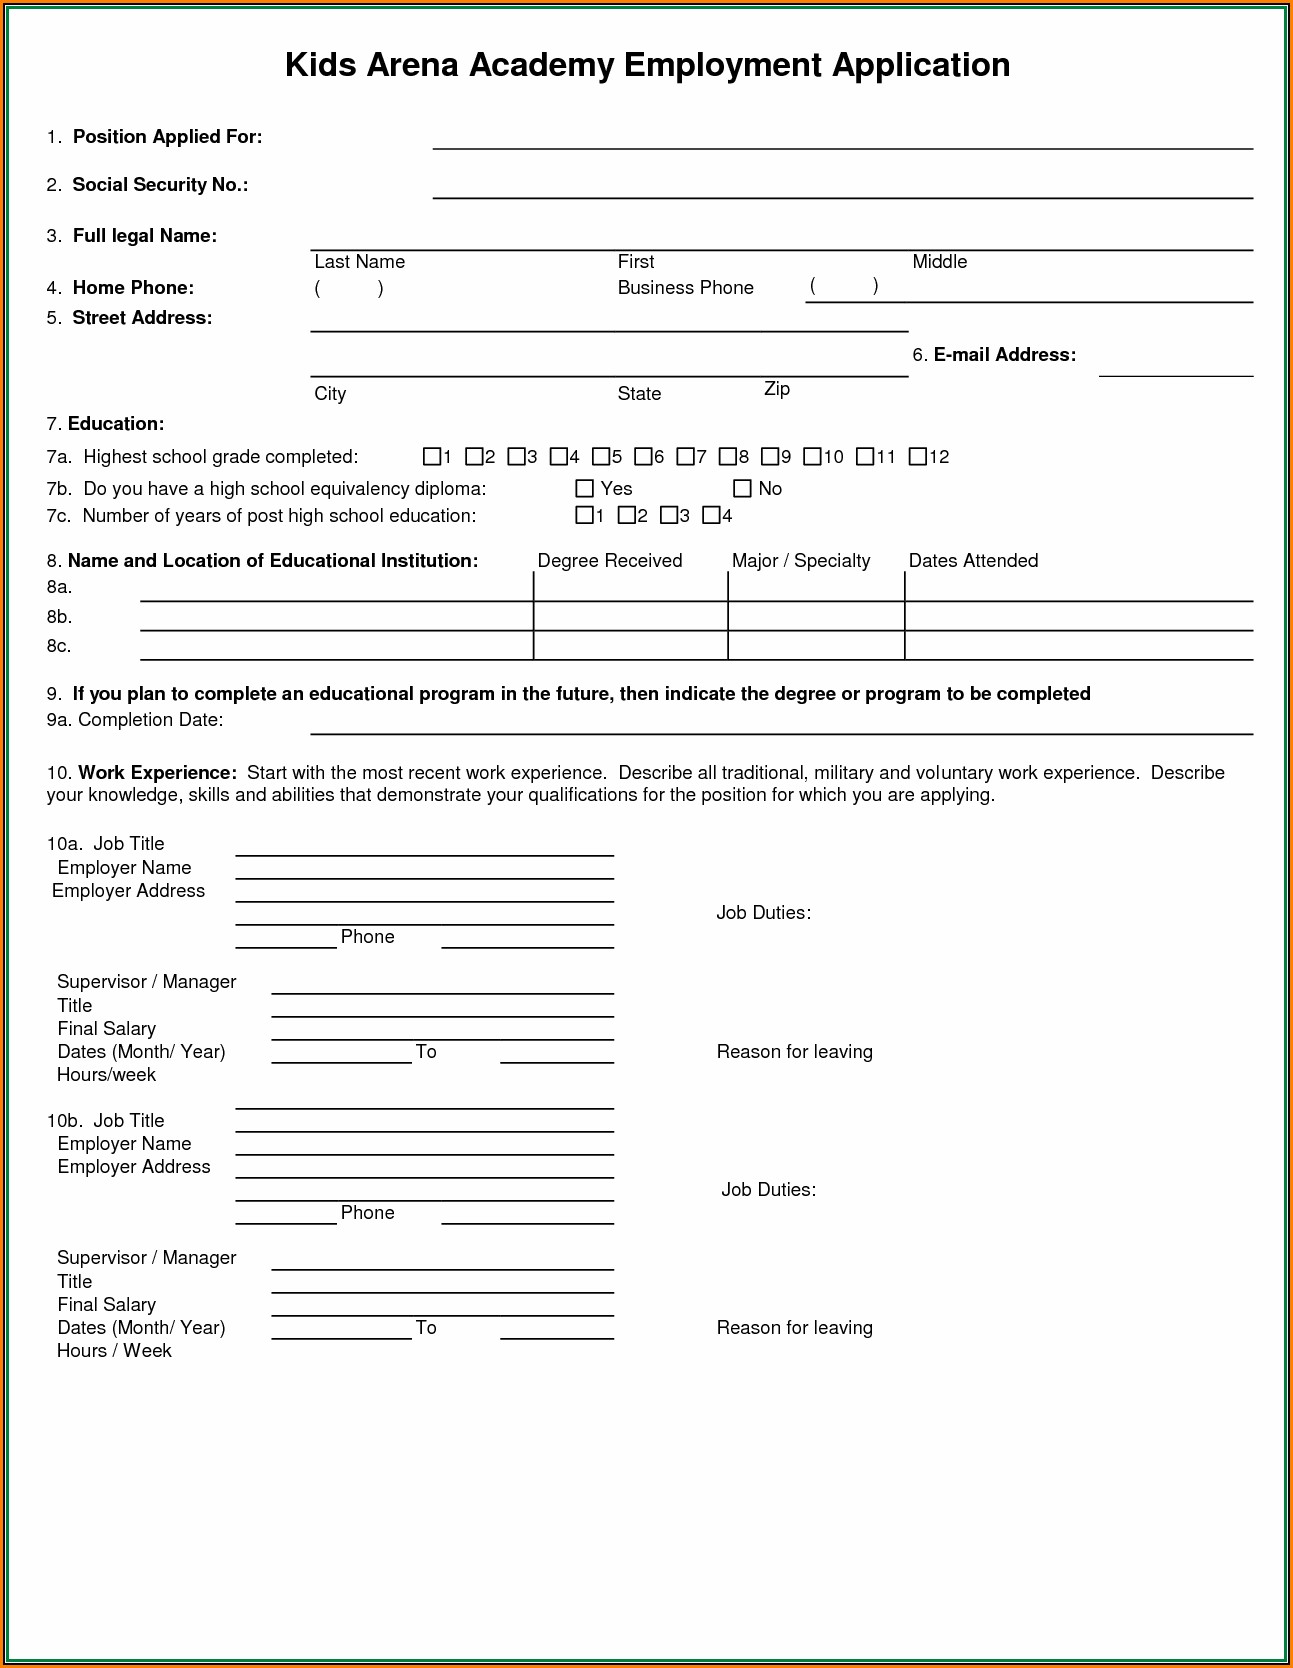 Security Guard Job Application Form